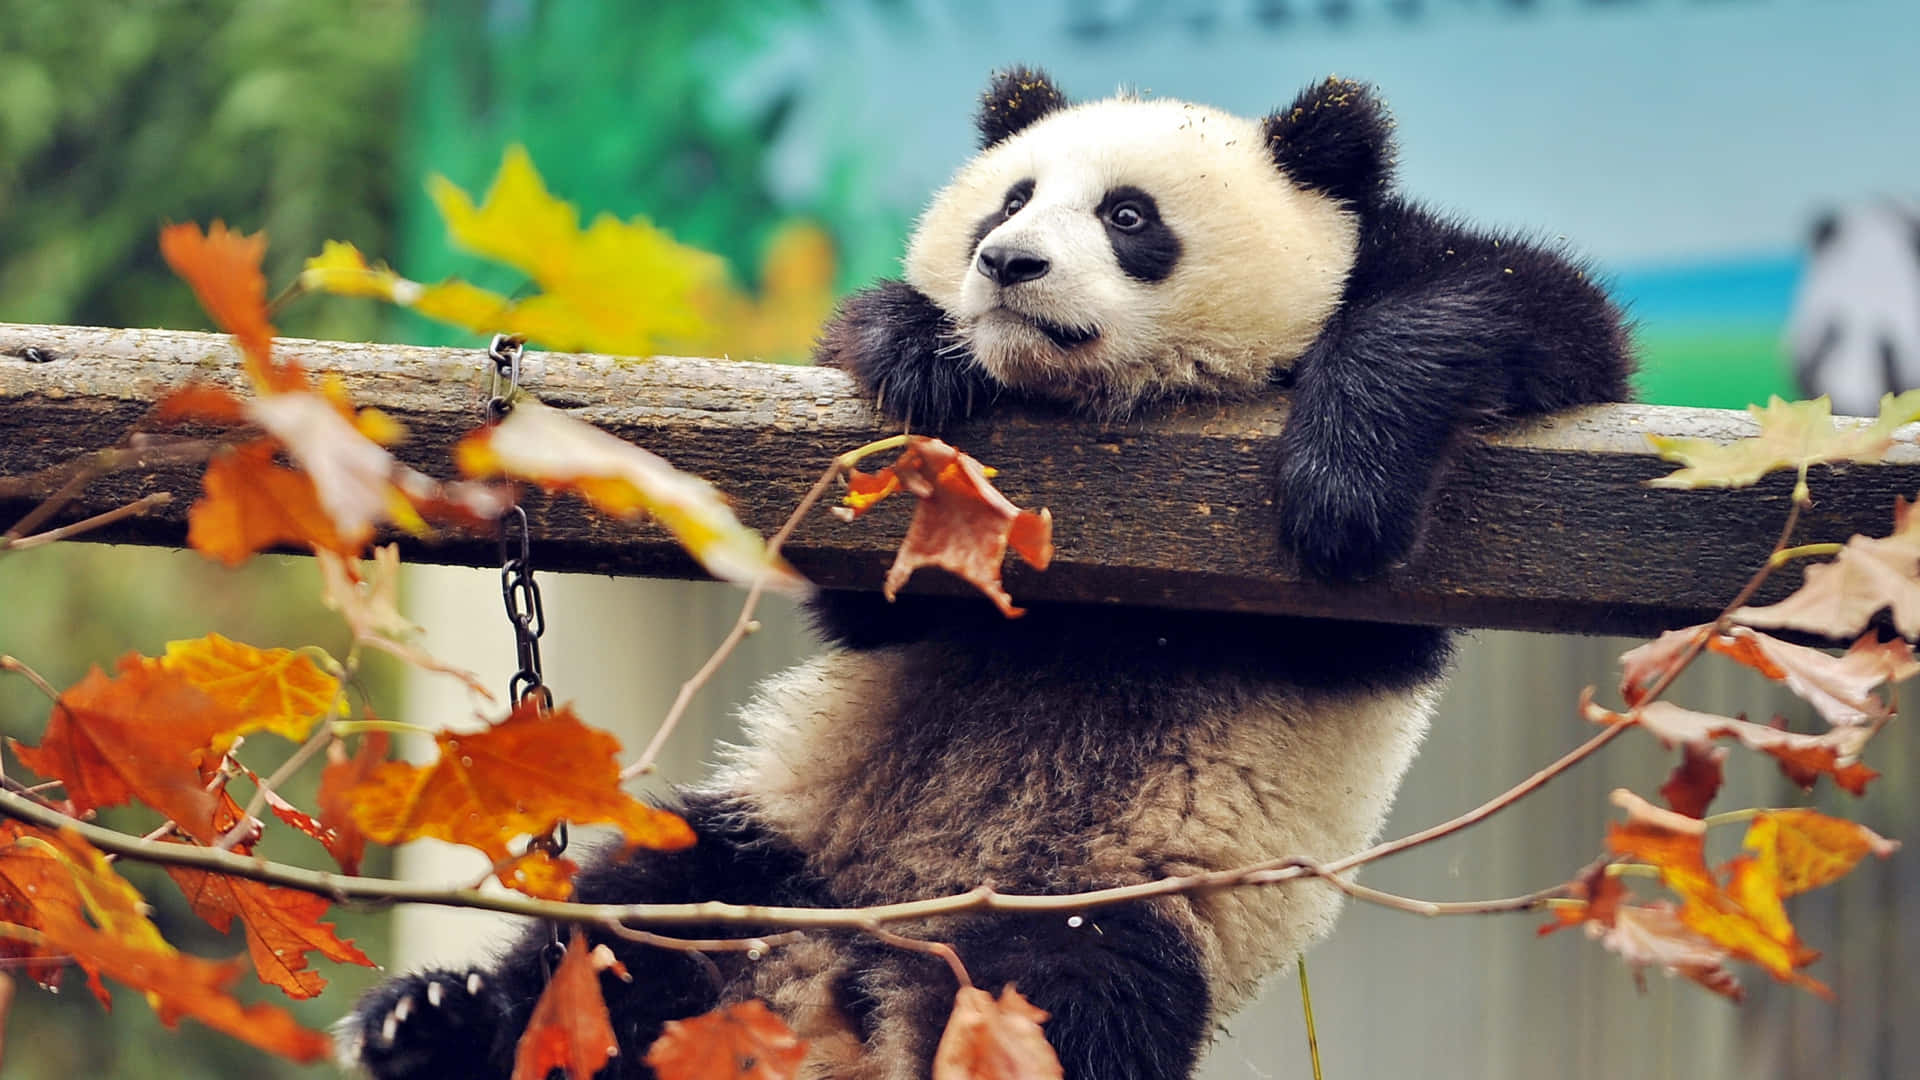 "Say hello to this cute panda!"